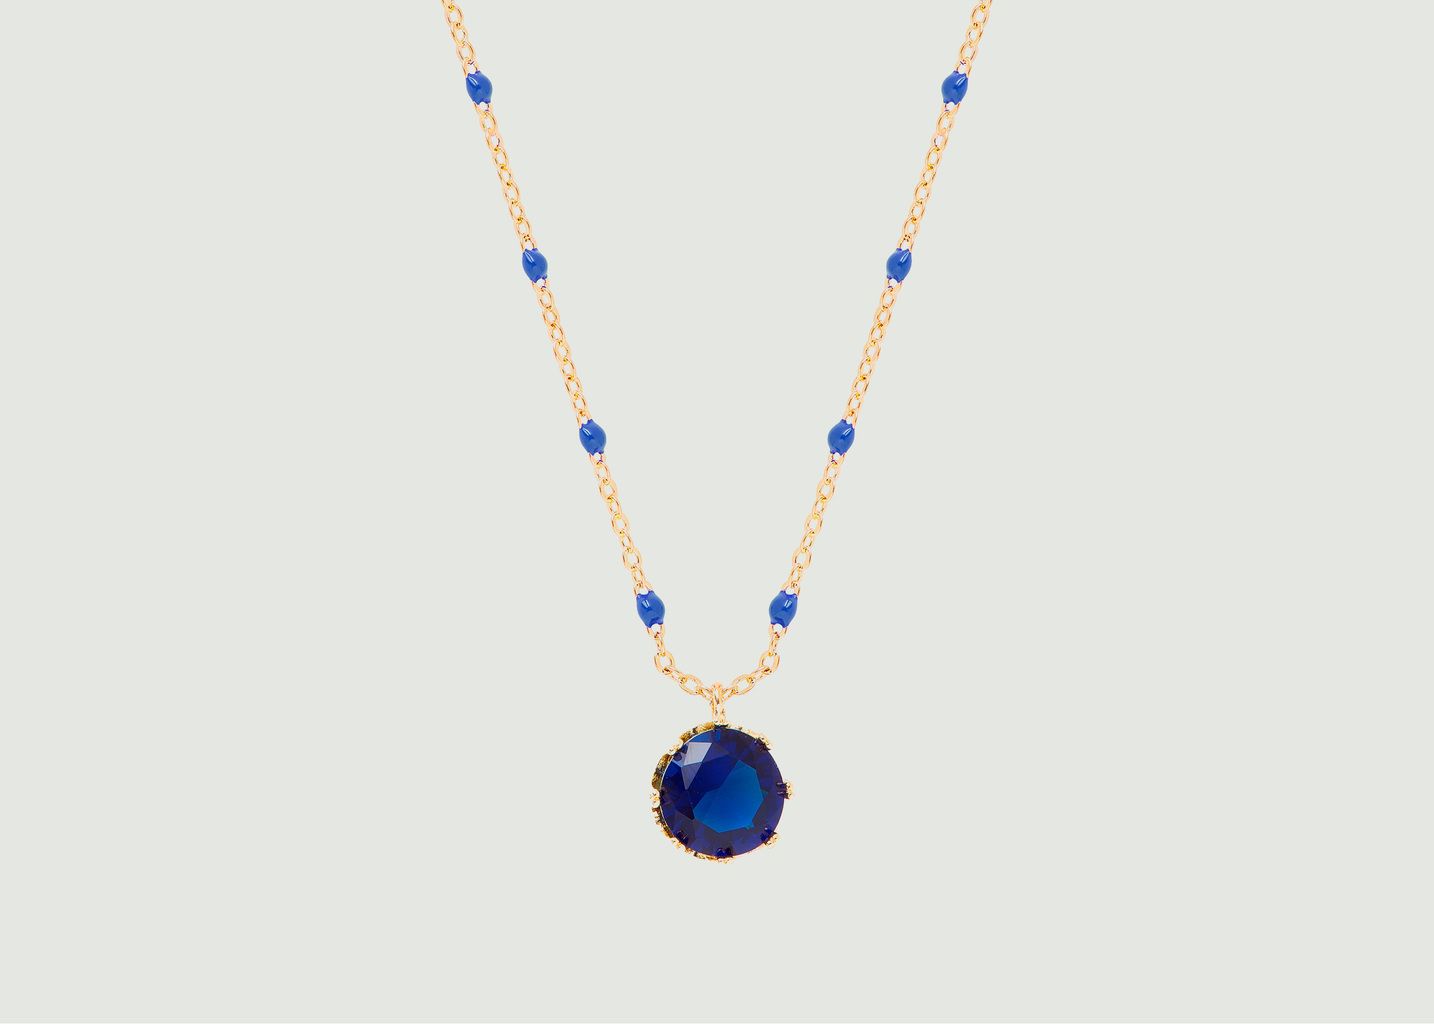 Necklace chain with round stone pendant Colorama - Les Néréides